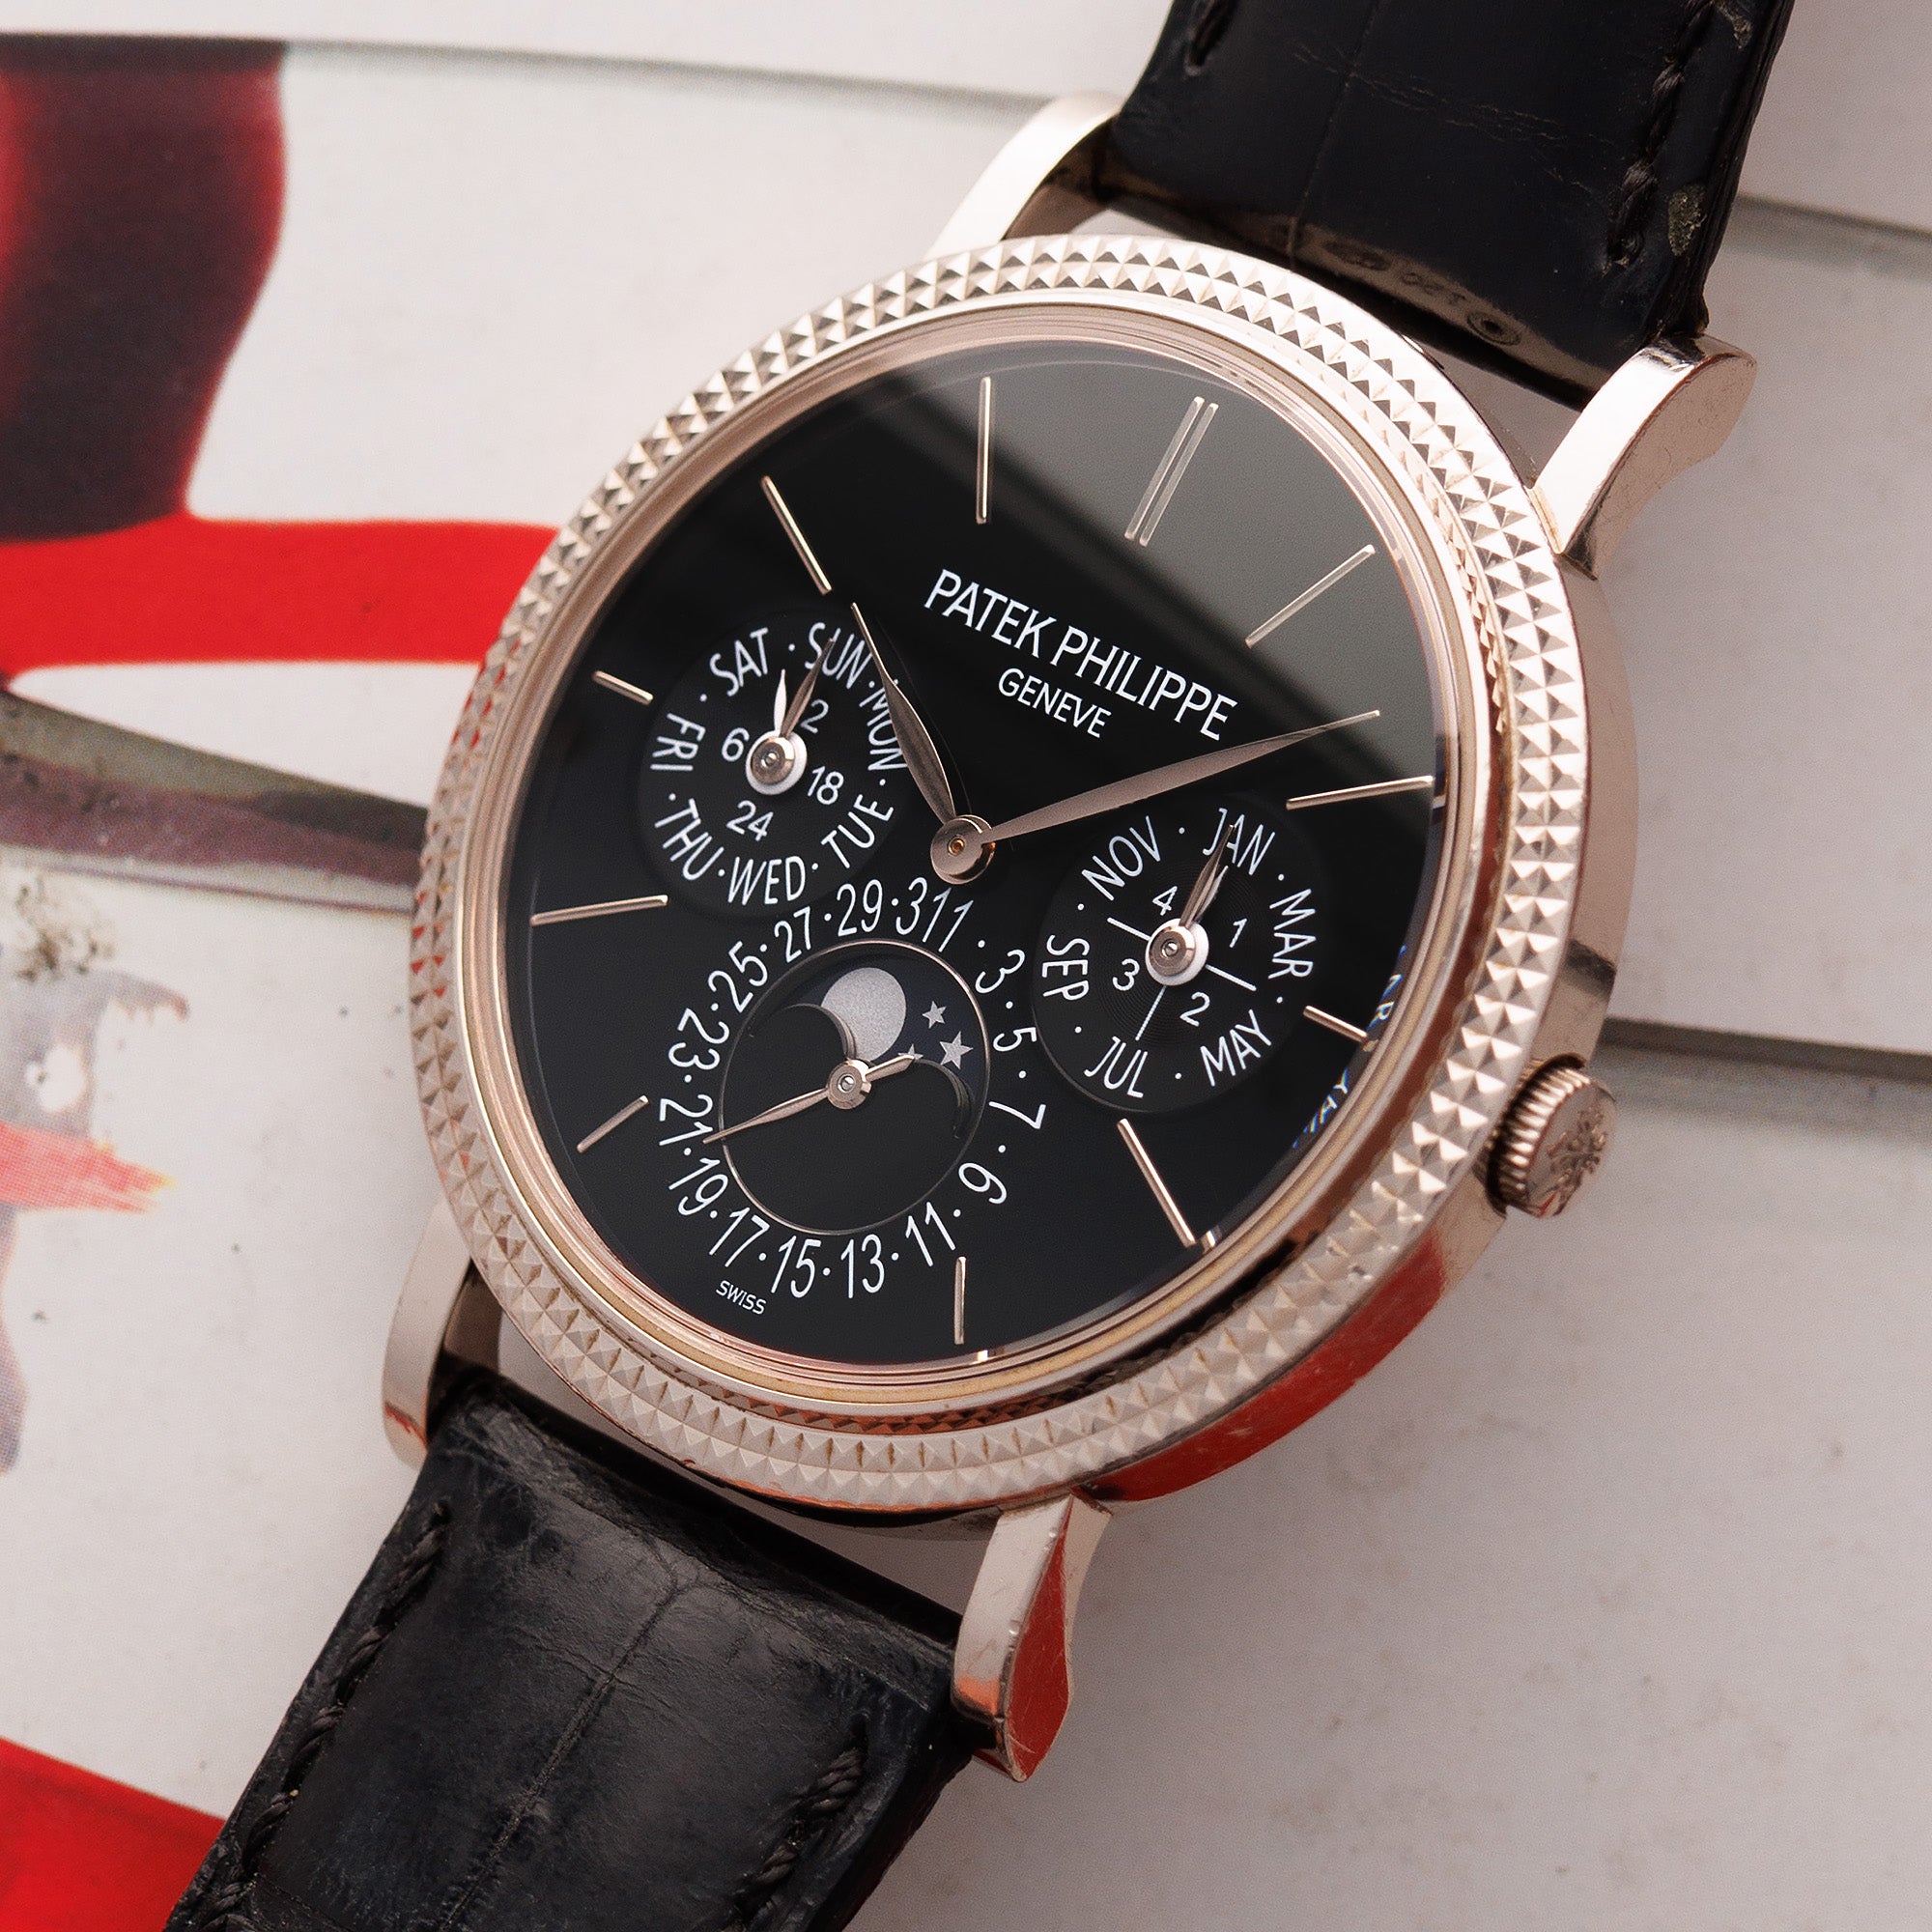 Patek Philippe - Patek Philippe White Gold Perpetual Calendar Watch Ref. 5139 - The Keystone Watches